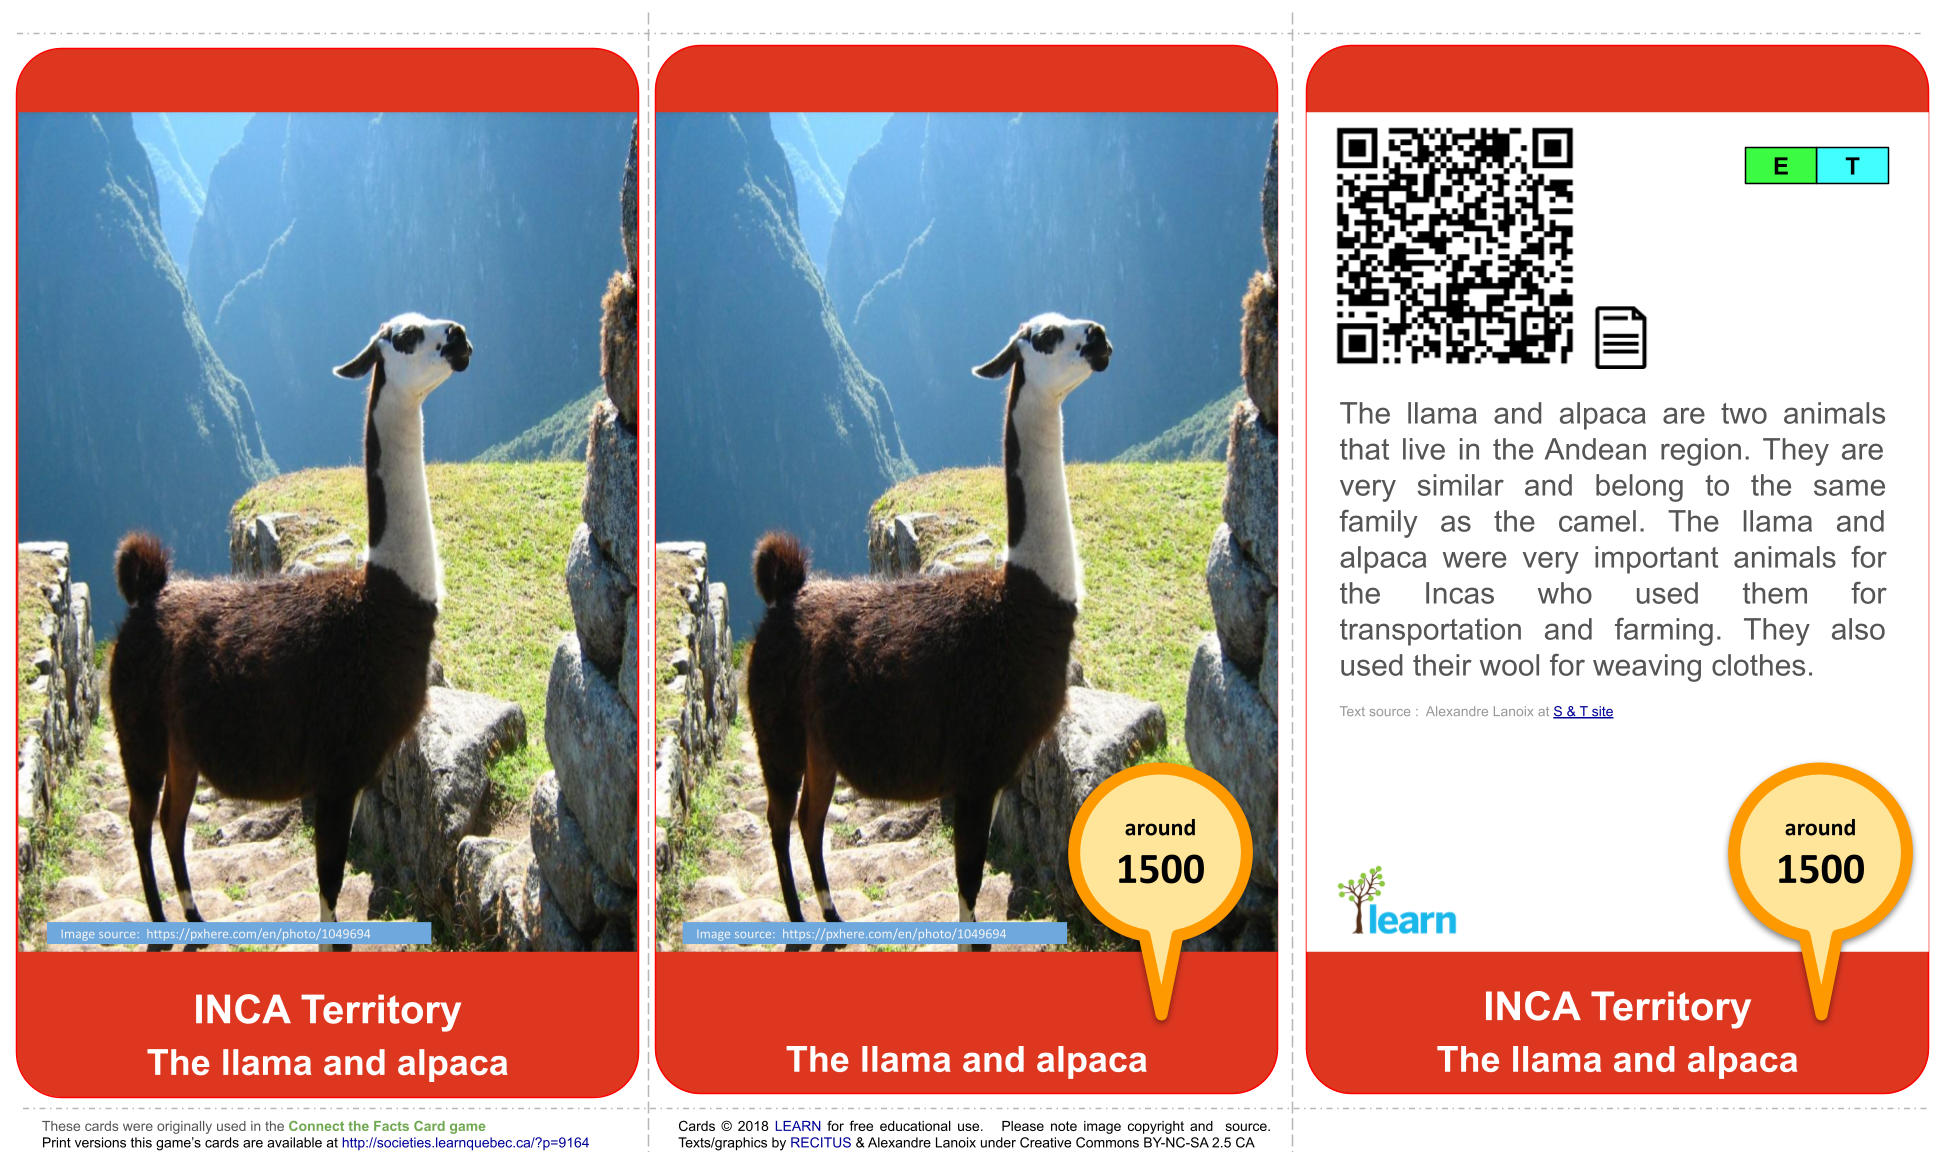 Inca: The llama and alpaca